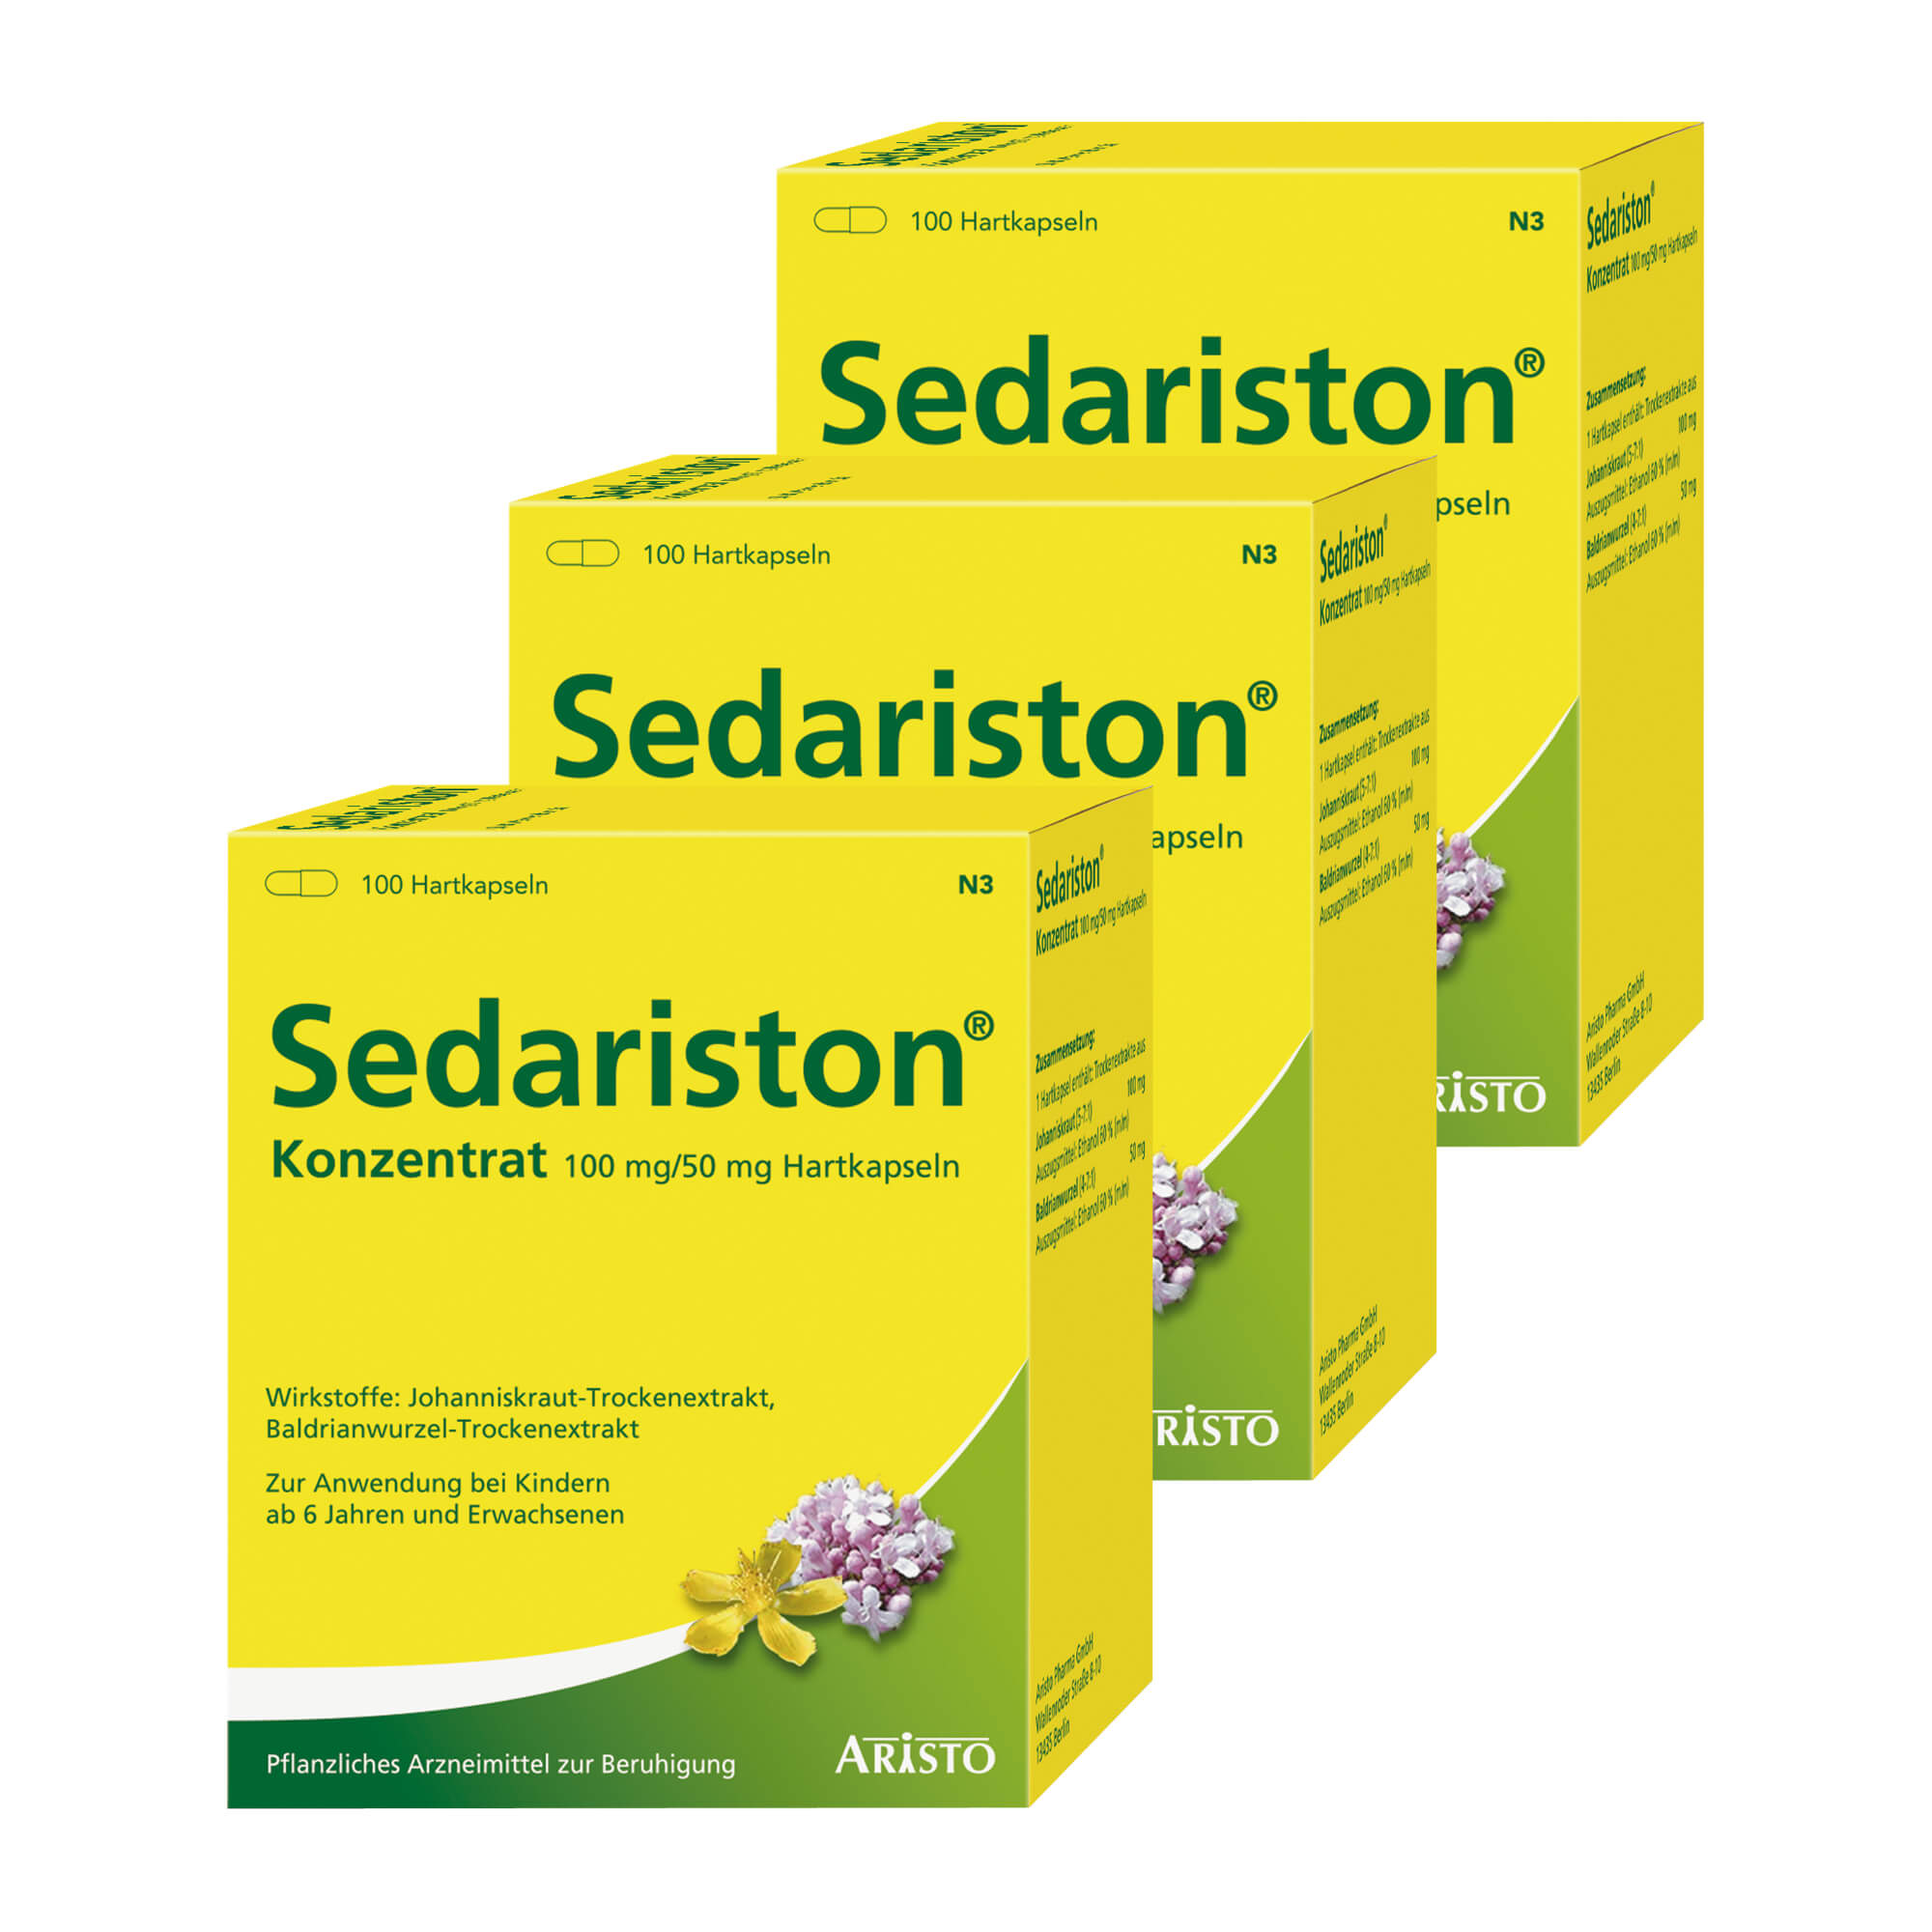 Spar-Set: Sedariston Konzentrat besteht aus 3 x Sedariston Konzentrat Hartkapseln.